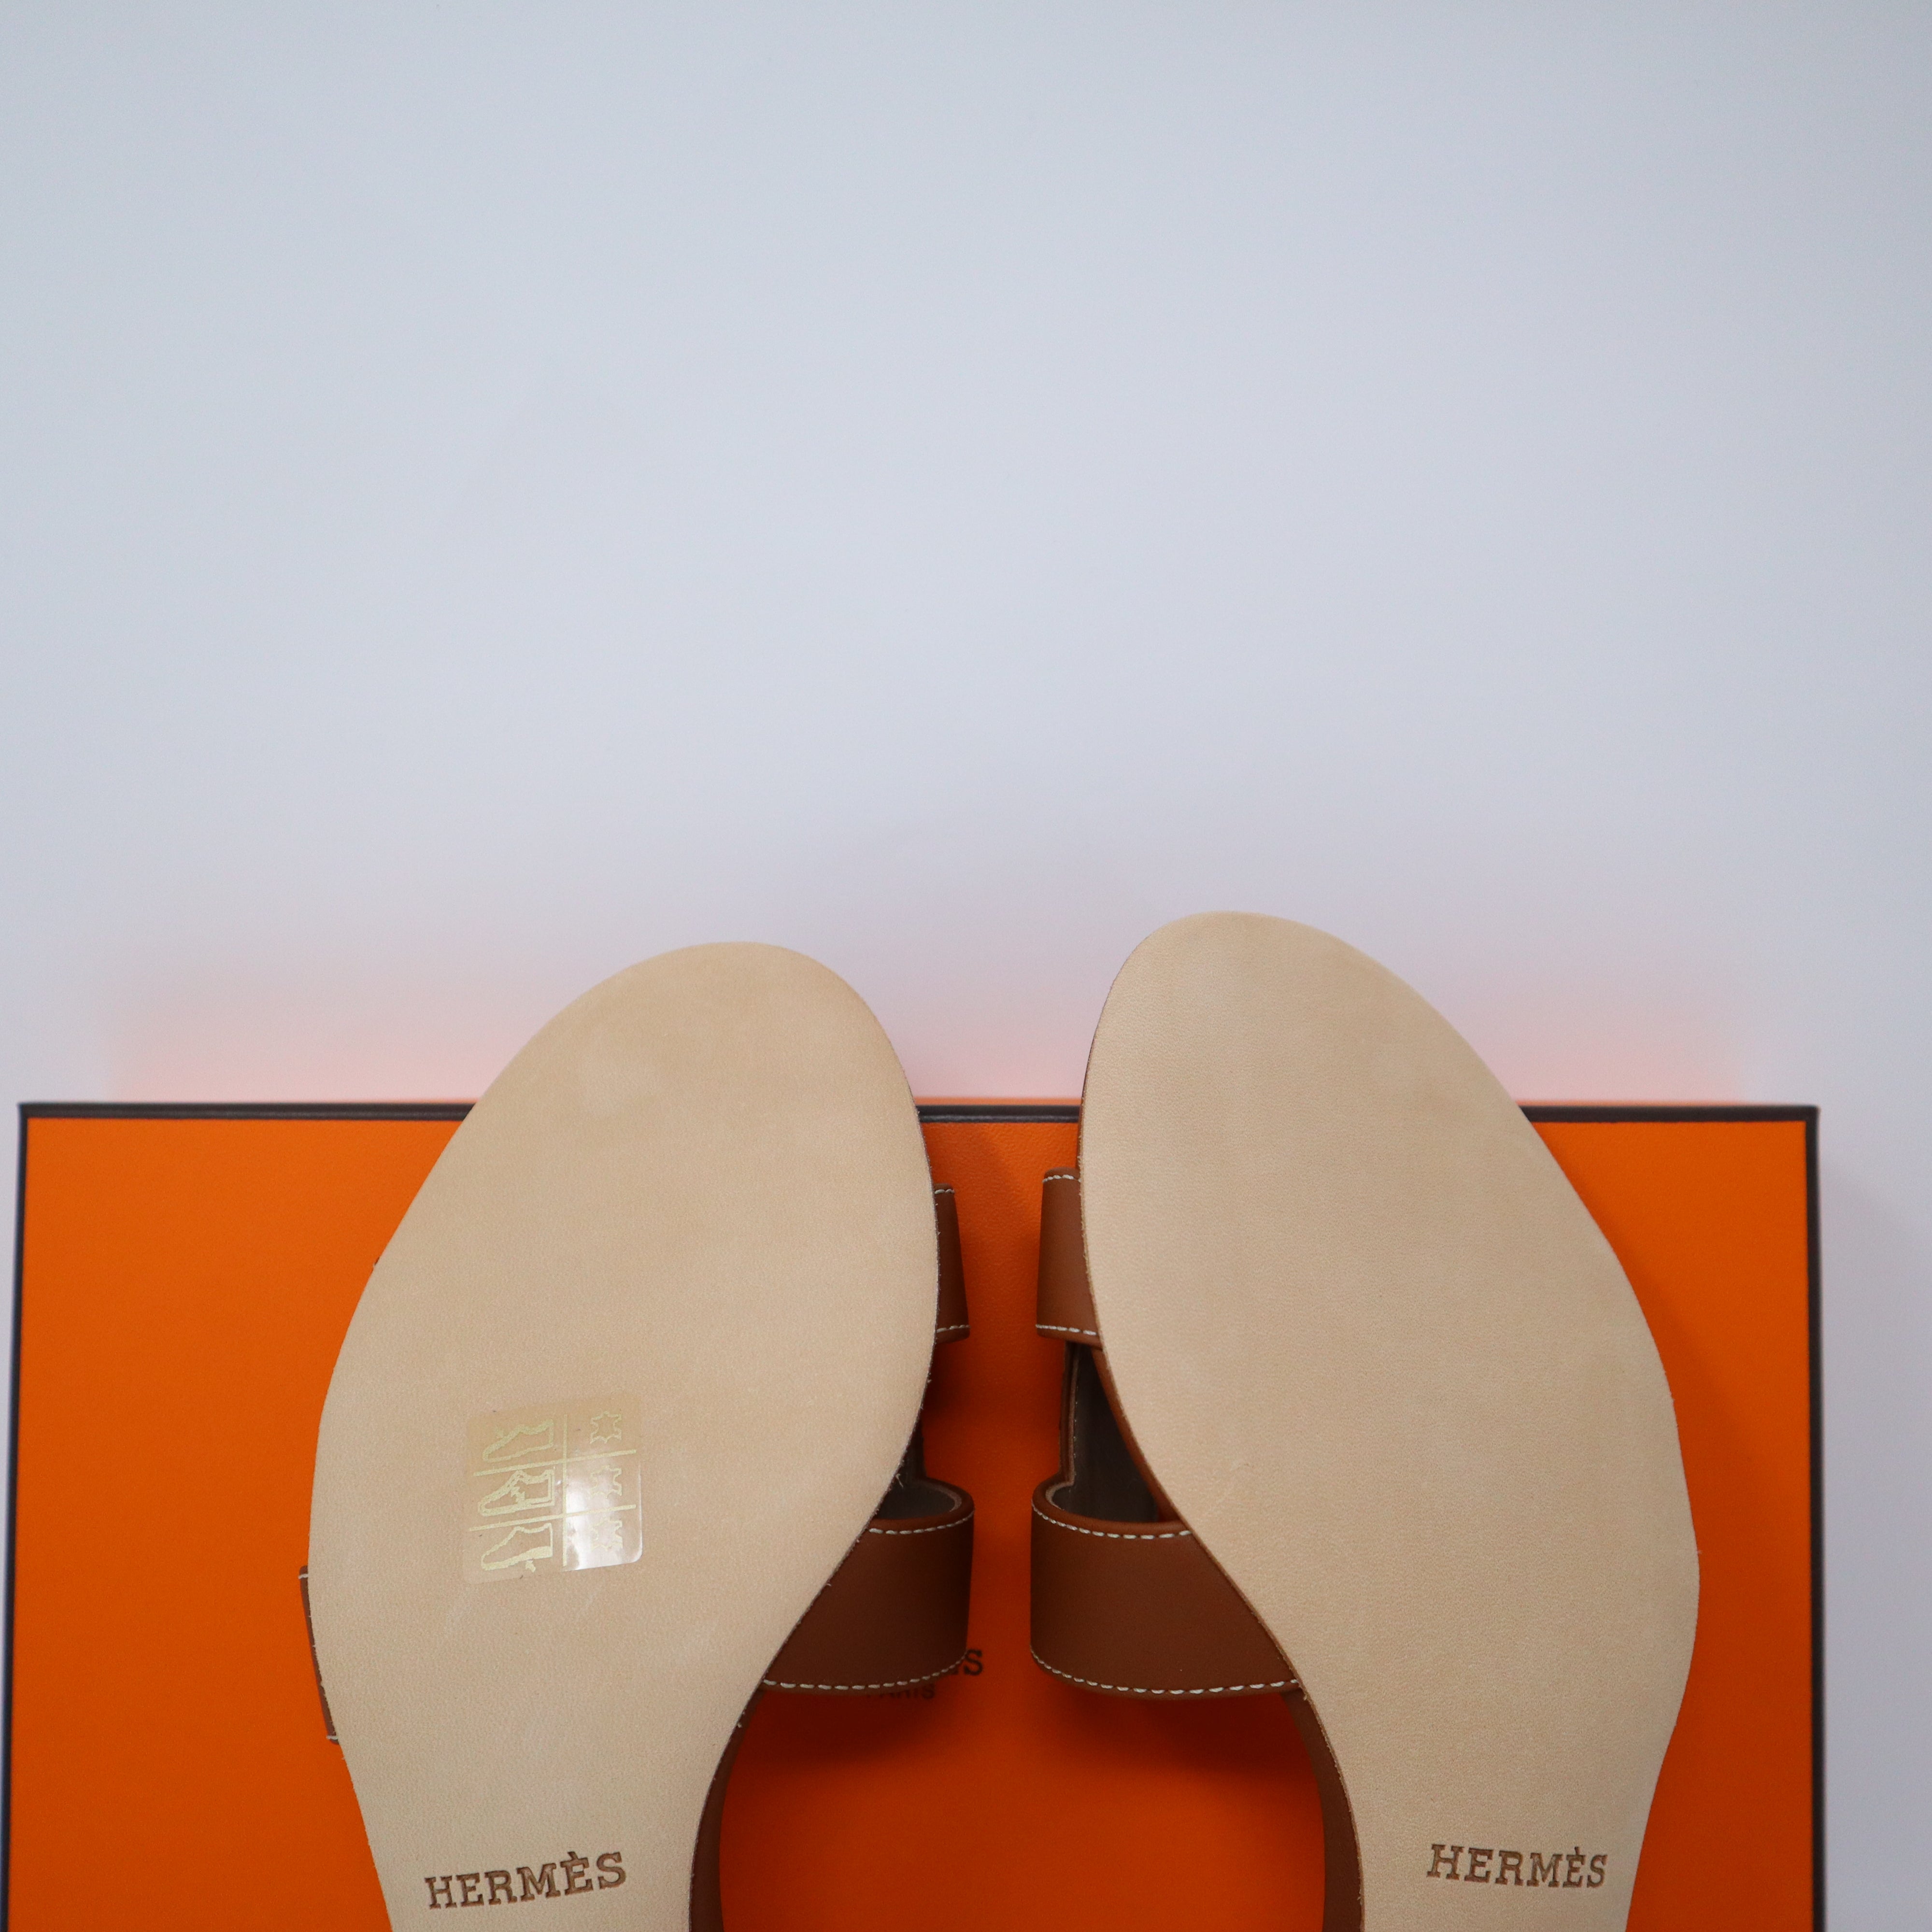 Oran Sandals (Gold) – The Glam Zone PH